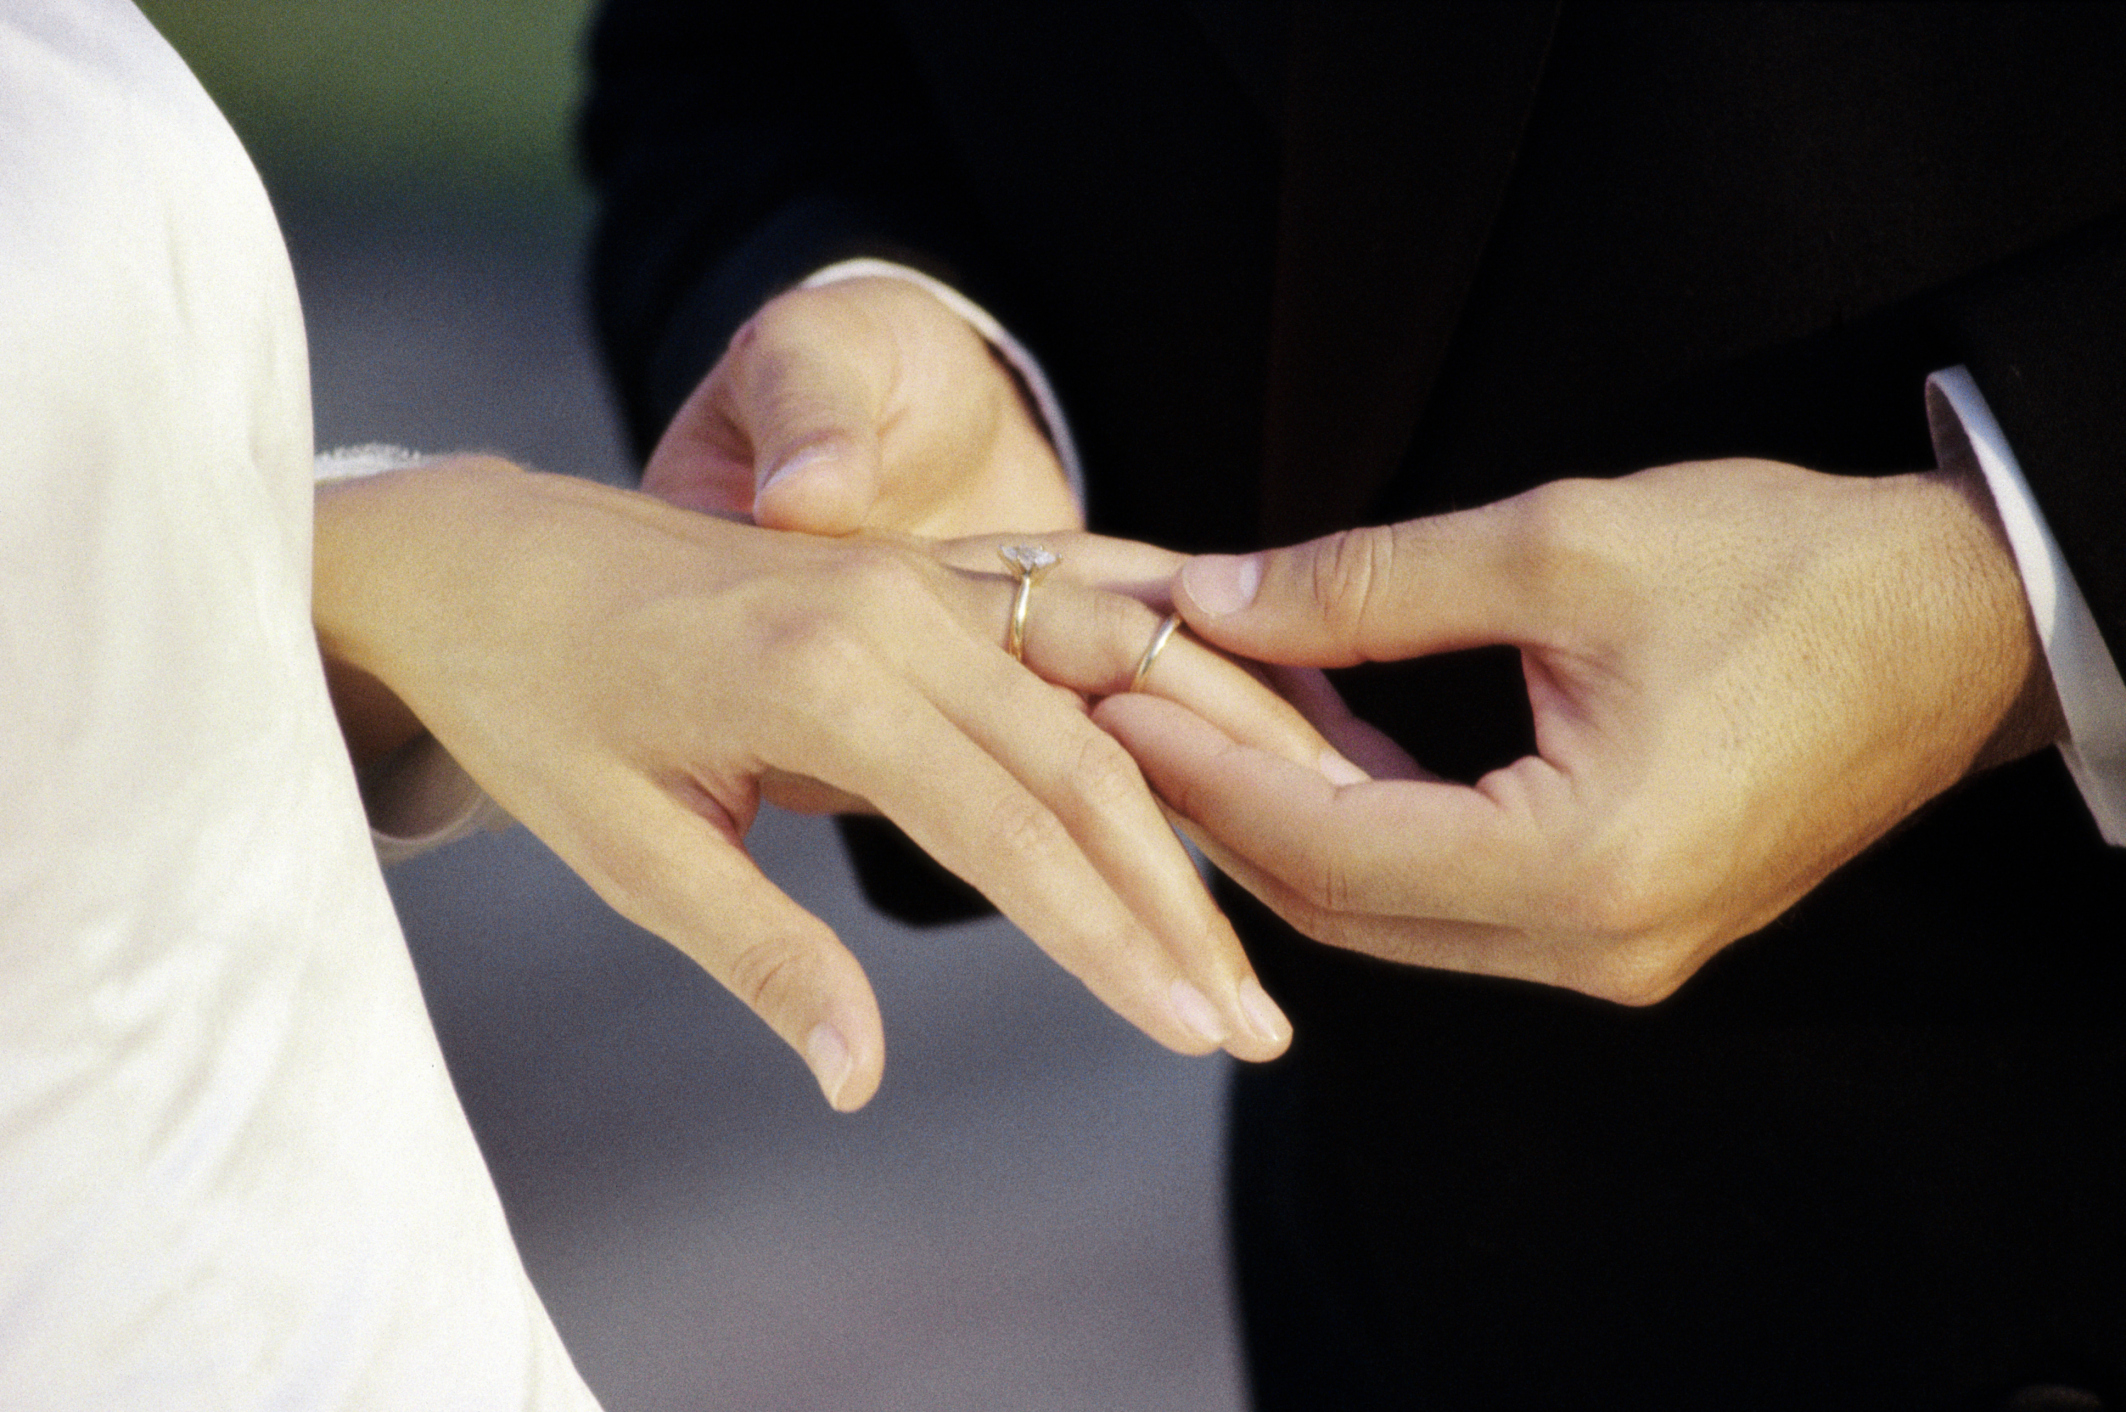 engagement ring wear wedding